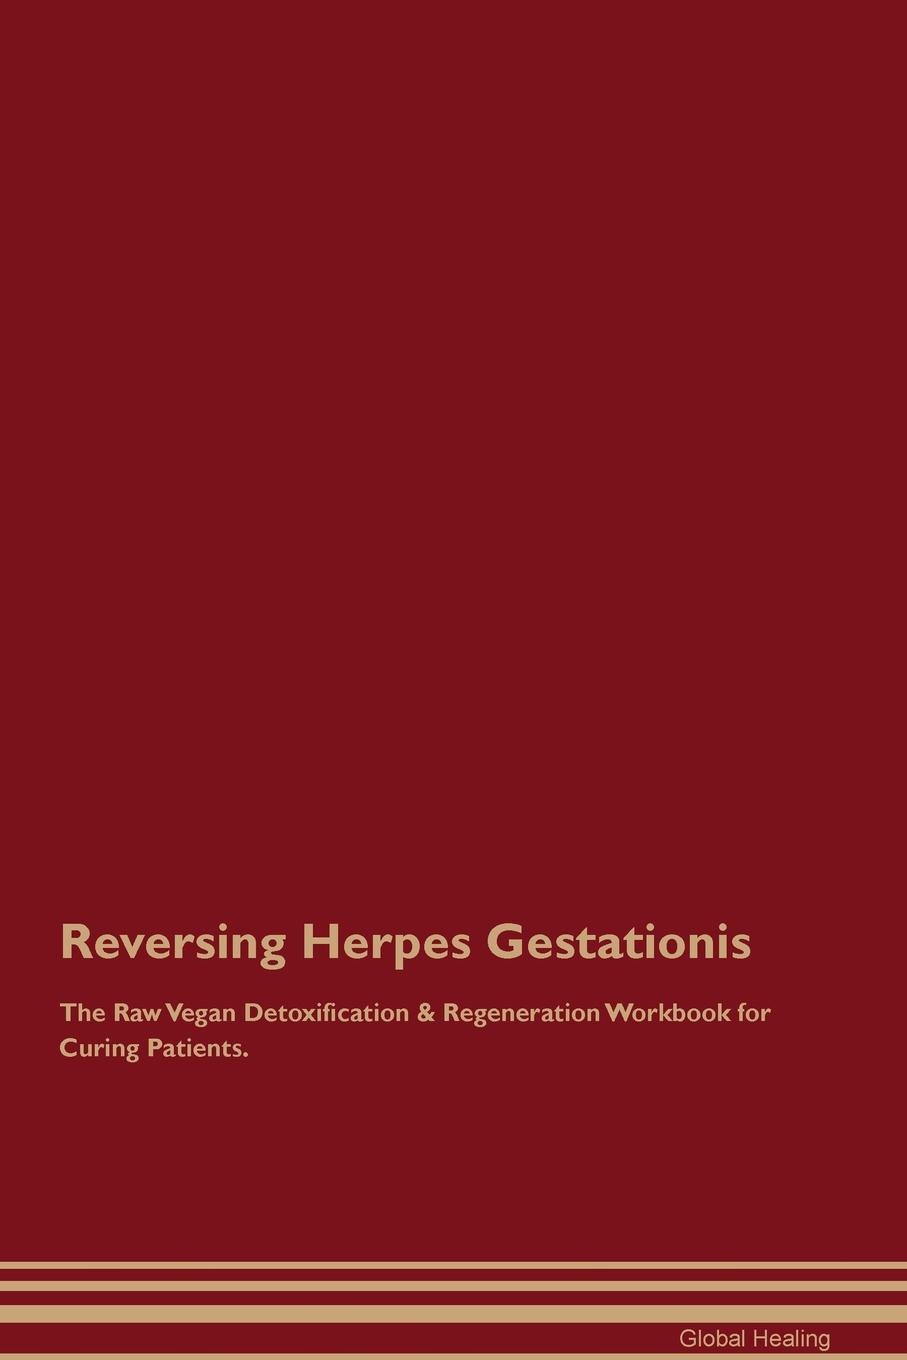 Reversing Herpes Gestationis The Raw Vegan Detoxification & Regeneration Workbook for Curing Patients